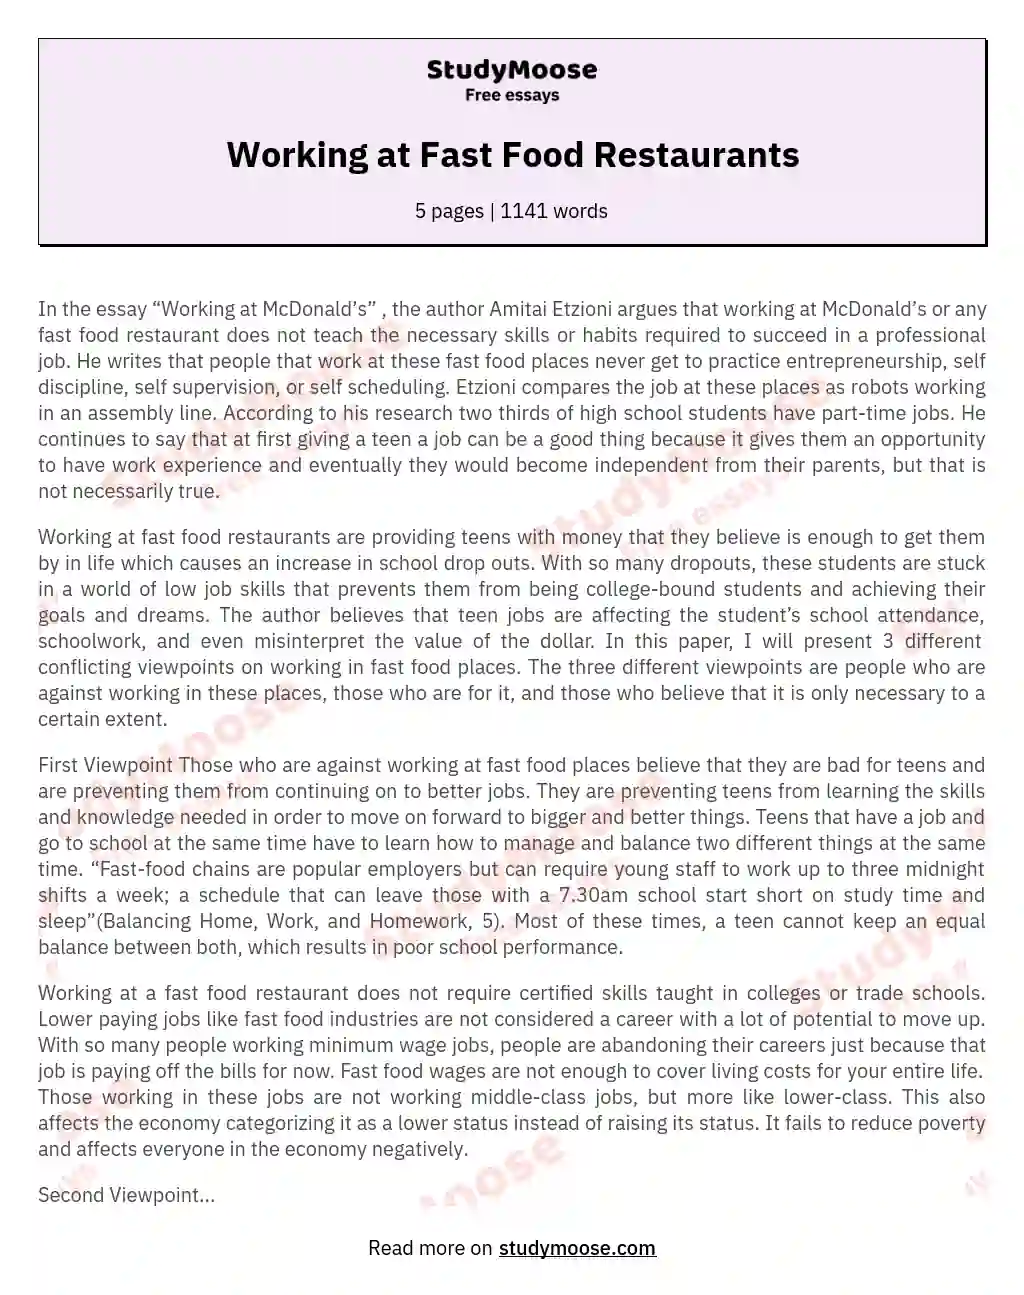 Working at Fast Food Restaurants essay